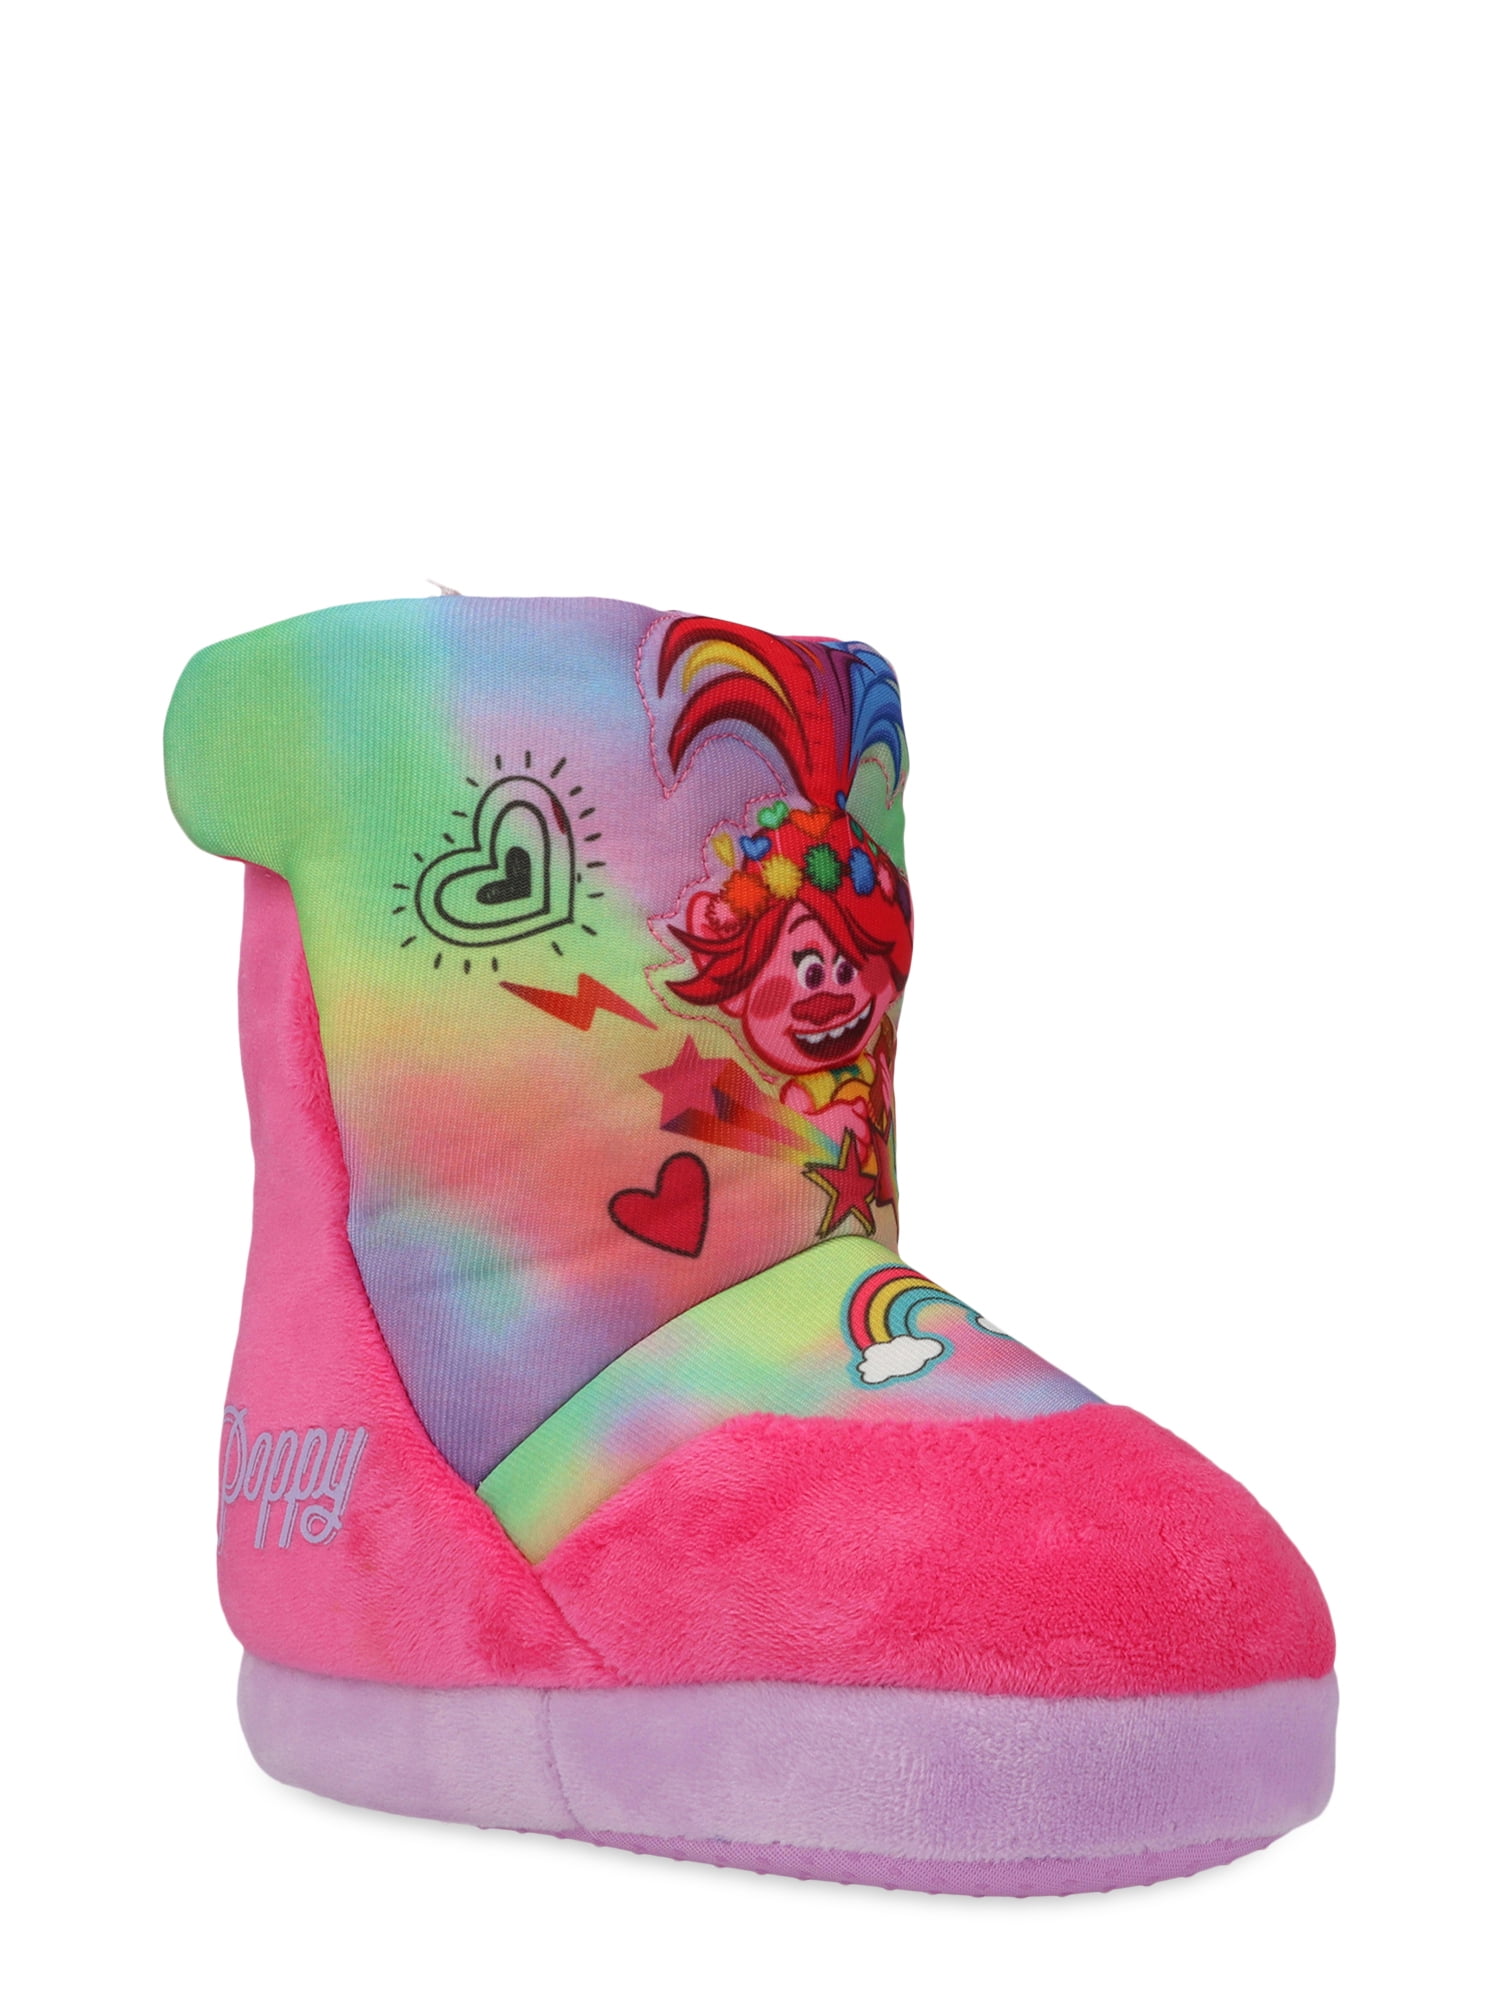 Kids Girls Trolls Clogs Slippers Sandals Yellow Size UK JNR 8.5-2.5 